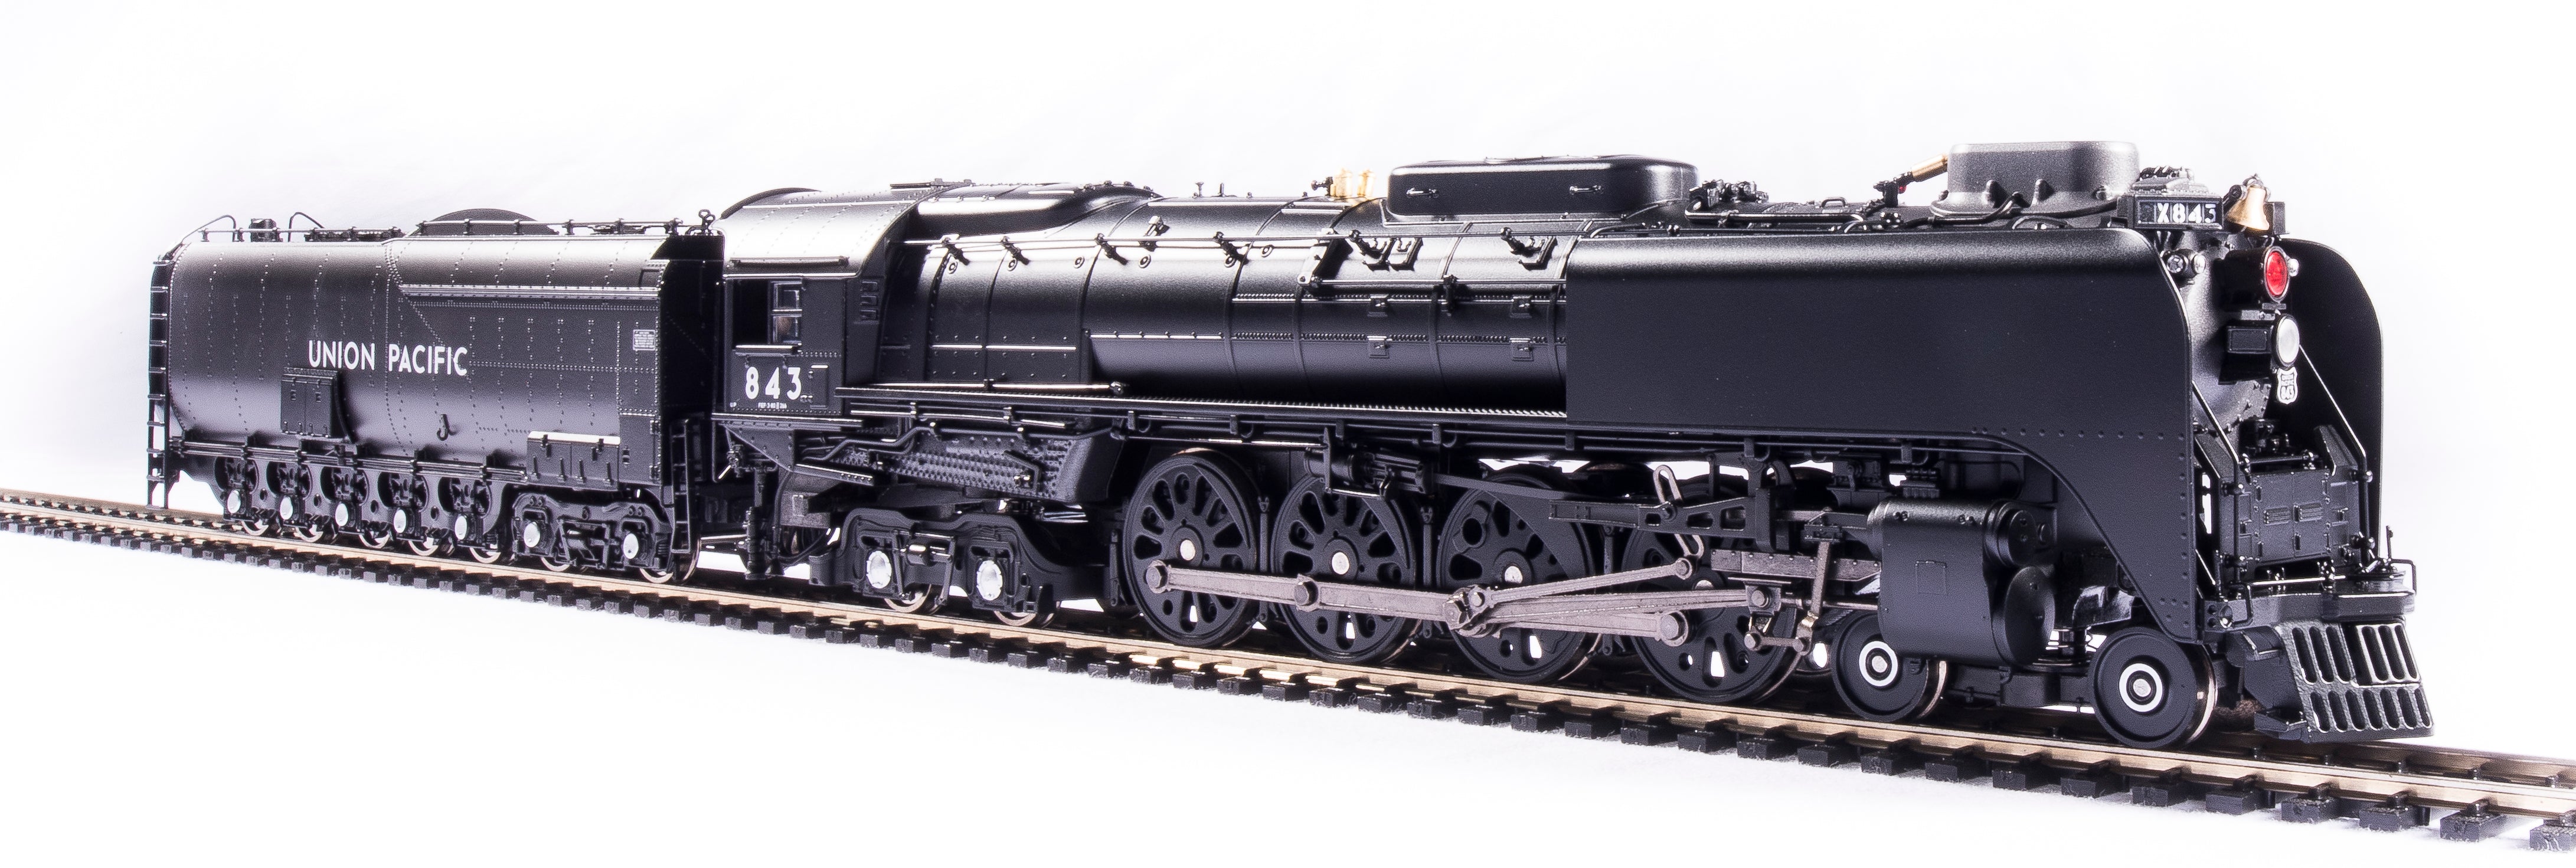 6643 Union Pacific 4-8-4, Class FEF-3, #838, Black & Graphite, Paragon4 Sound/DC/DCC, Smoke, HO